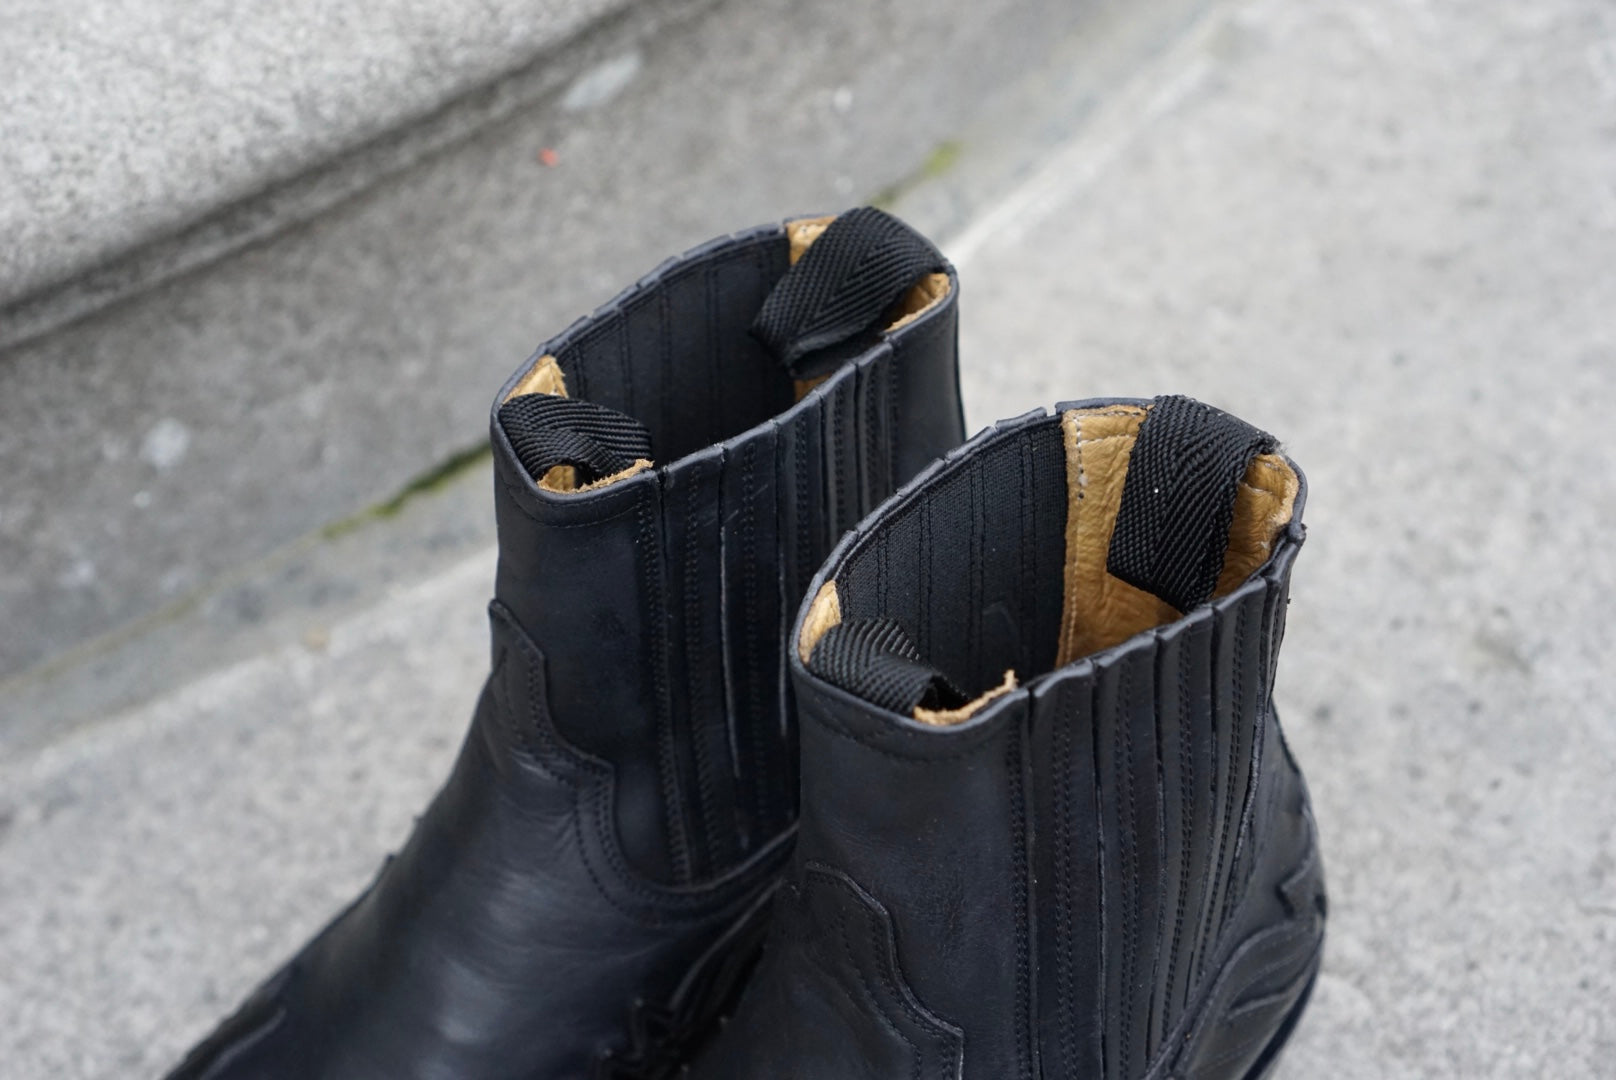 Cuervo boots